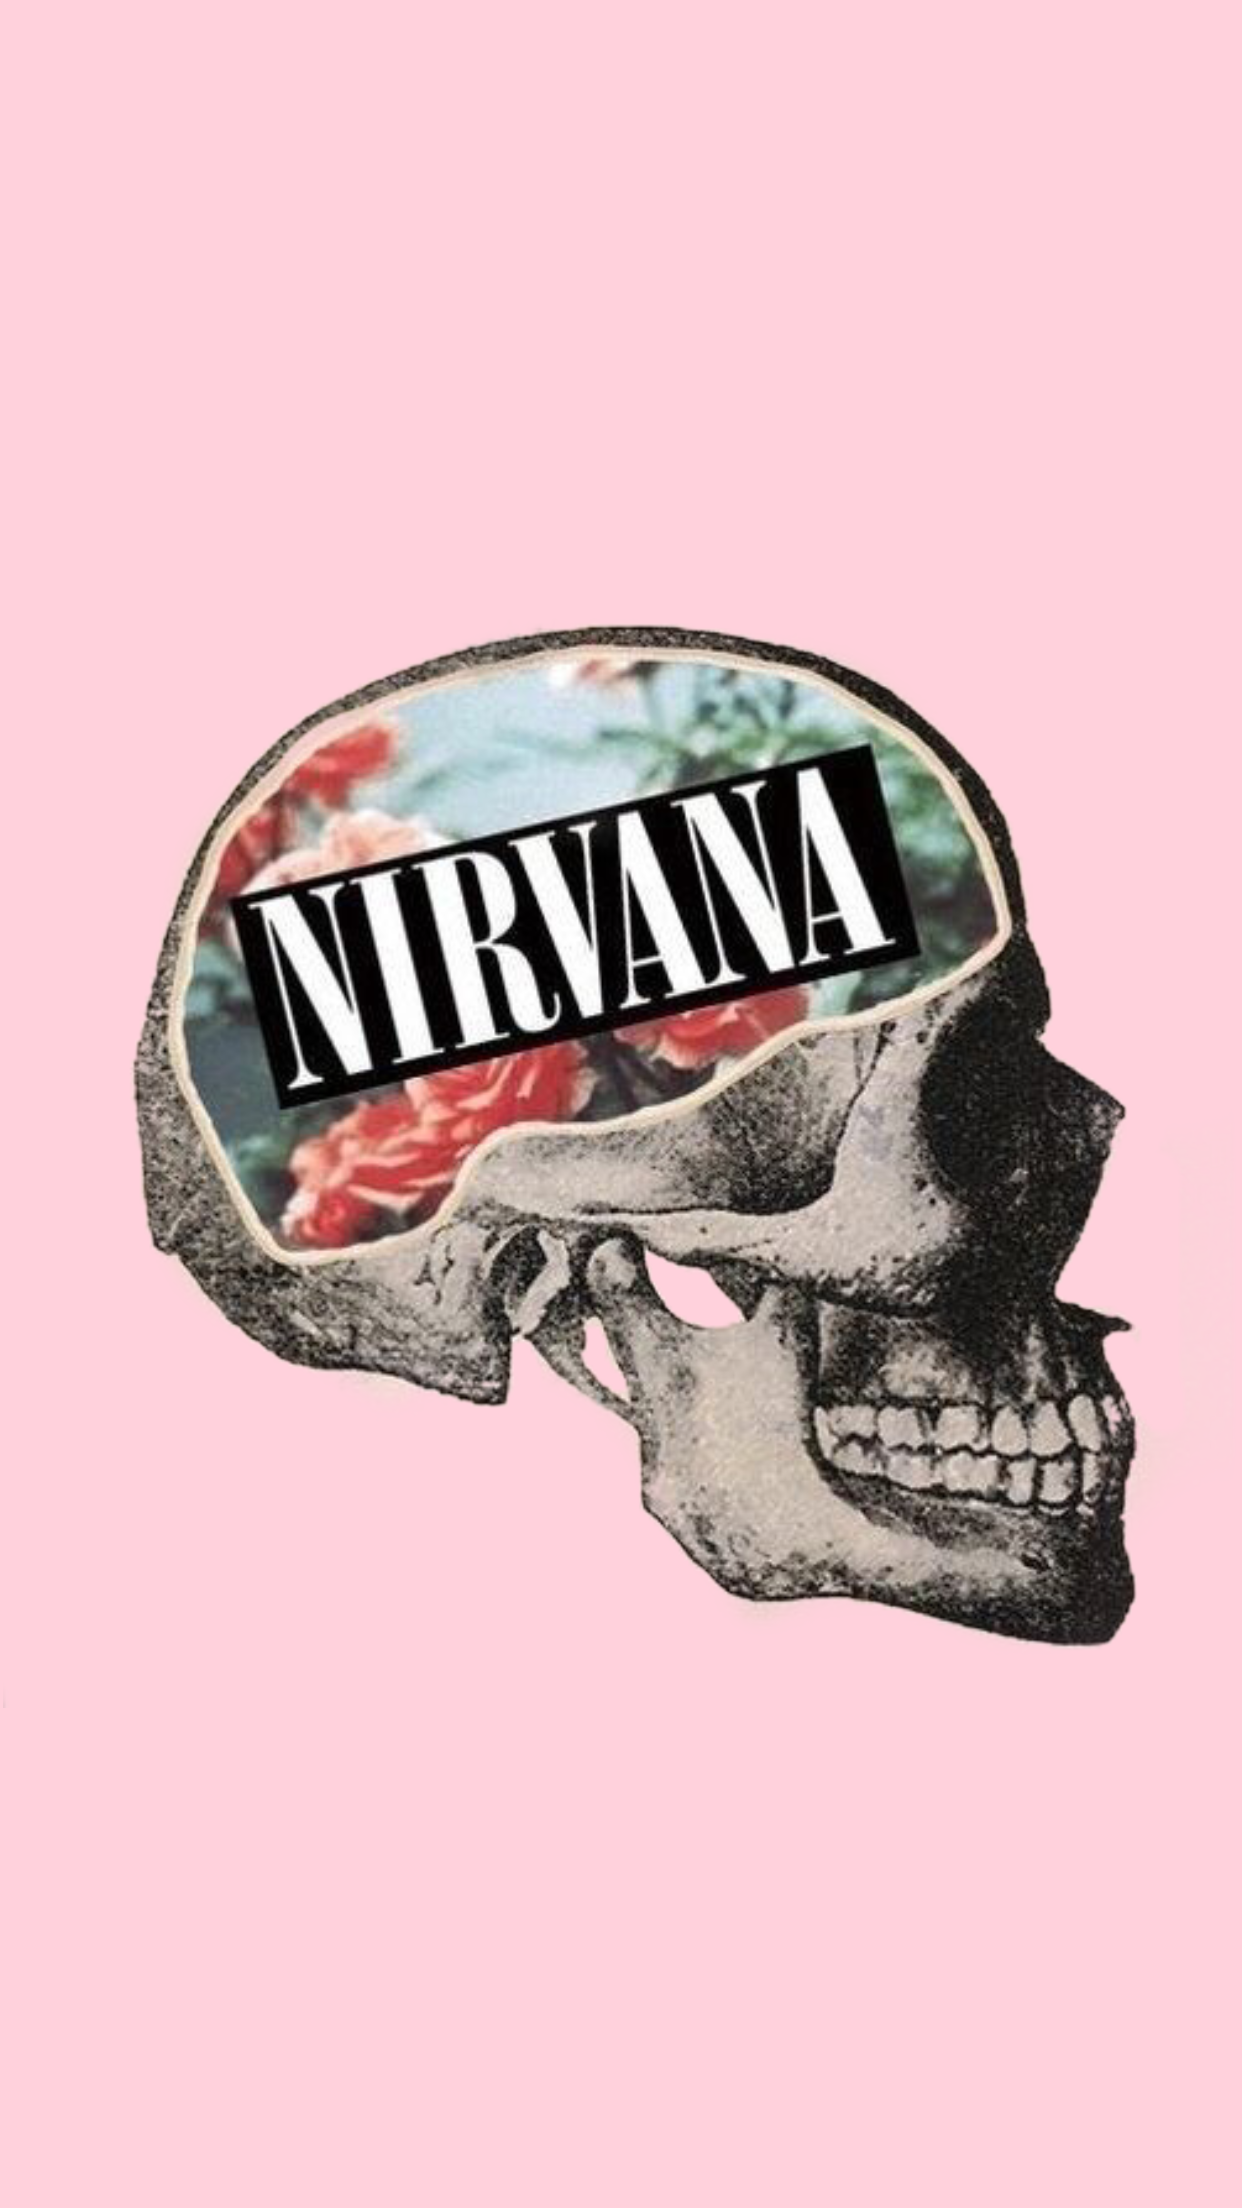 Skull Nirvana iphone wallpaper pastel pink. Emo wallpaper, Hipster wallpaper, Goth wallpaper